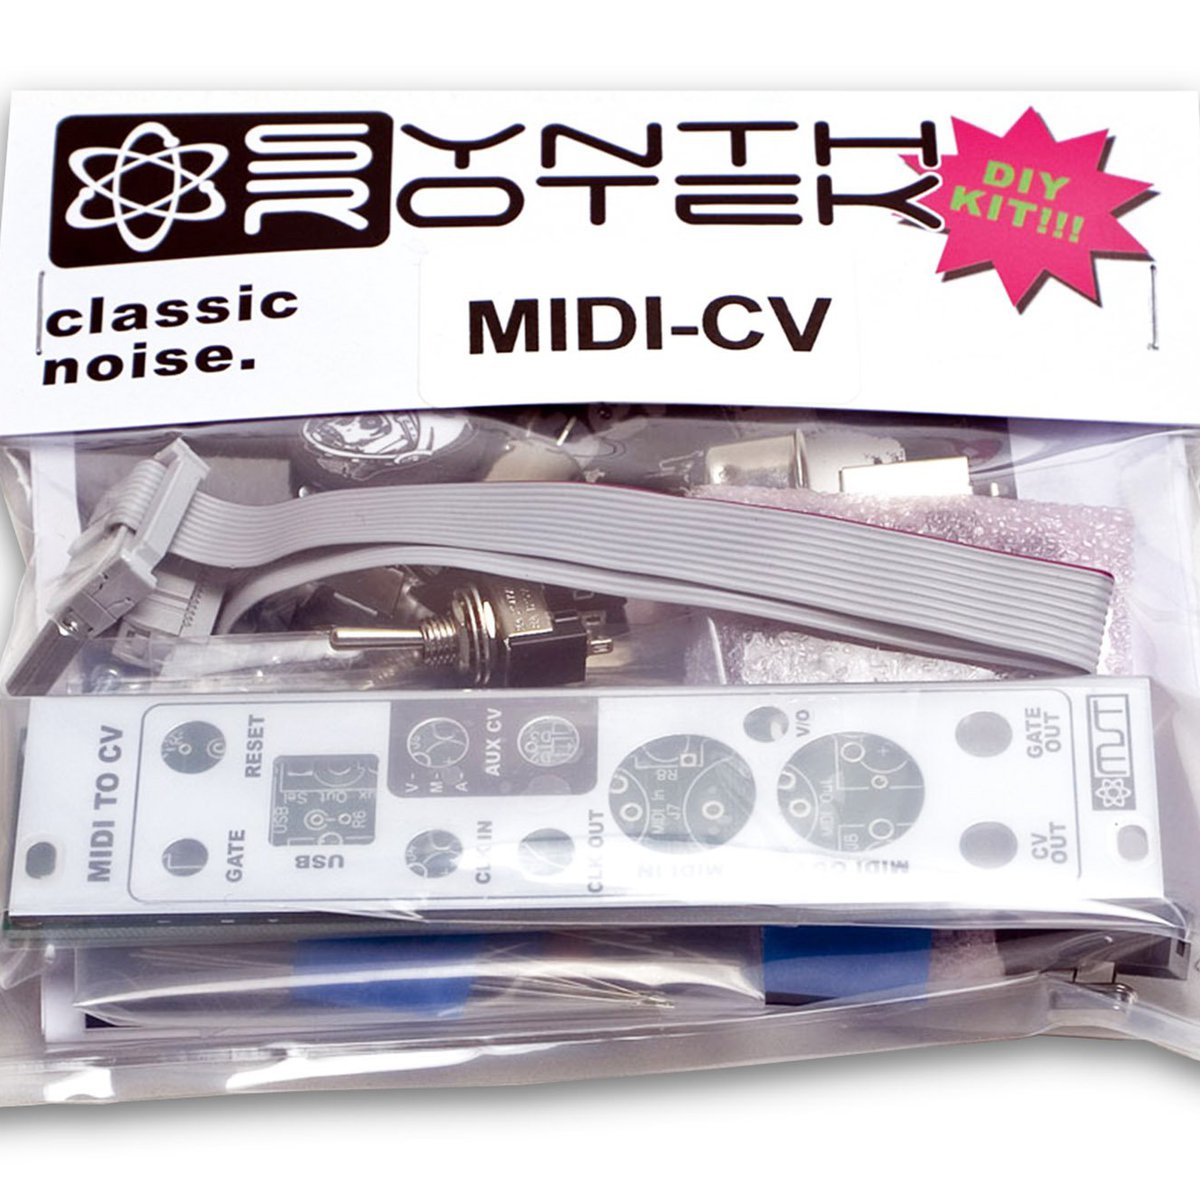 Pocket Operator MIDI Adapter V3 from Hanz Tech Inc on Tindie